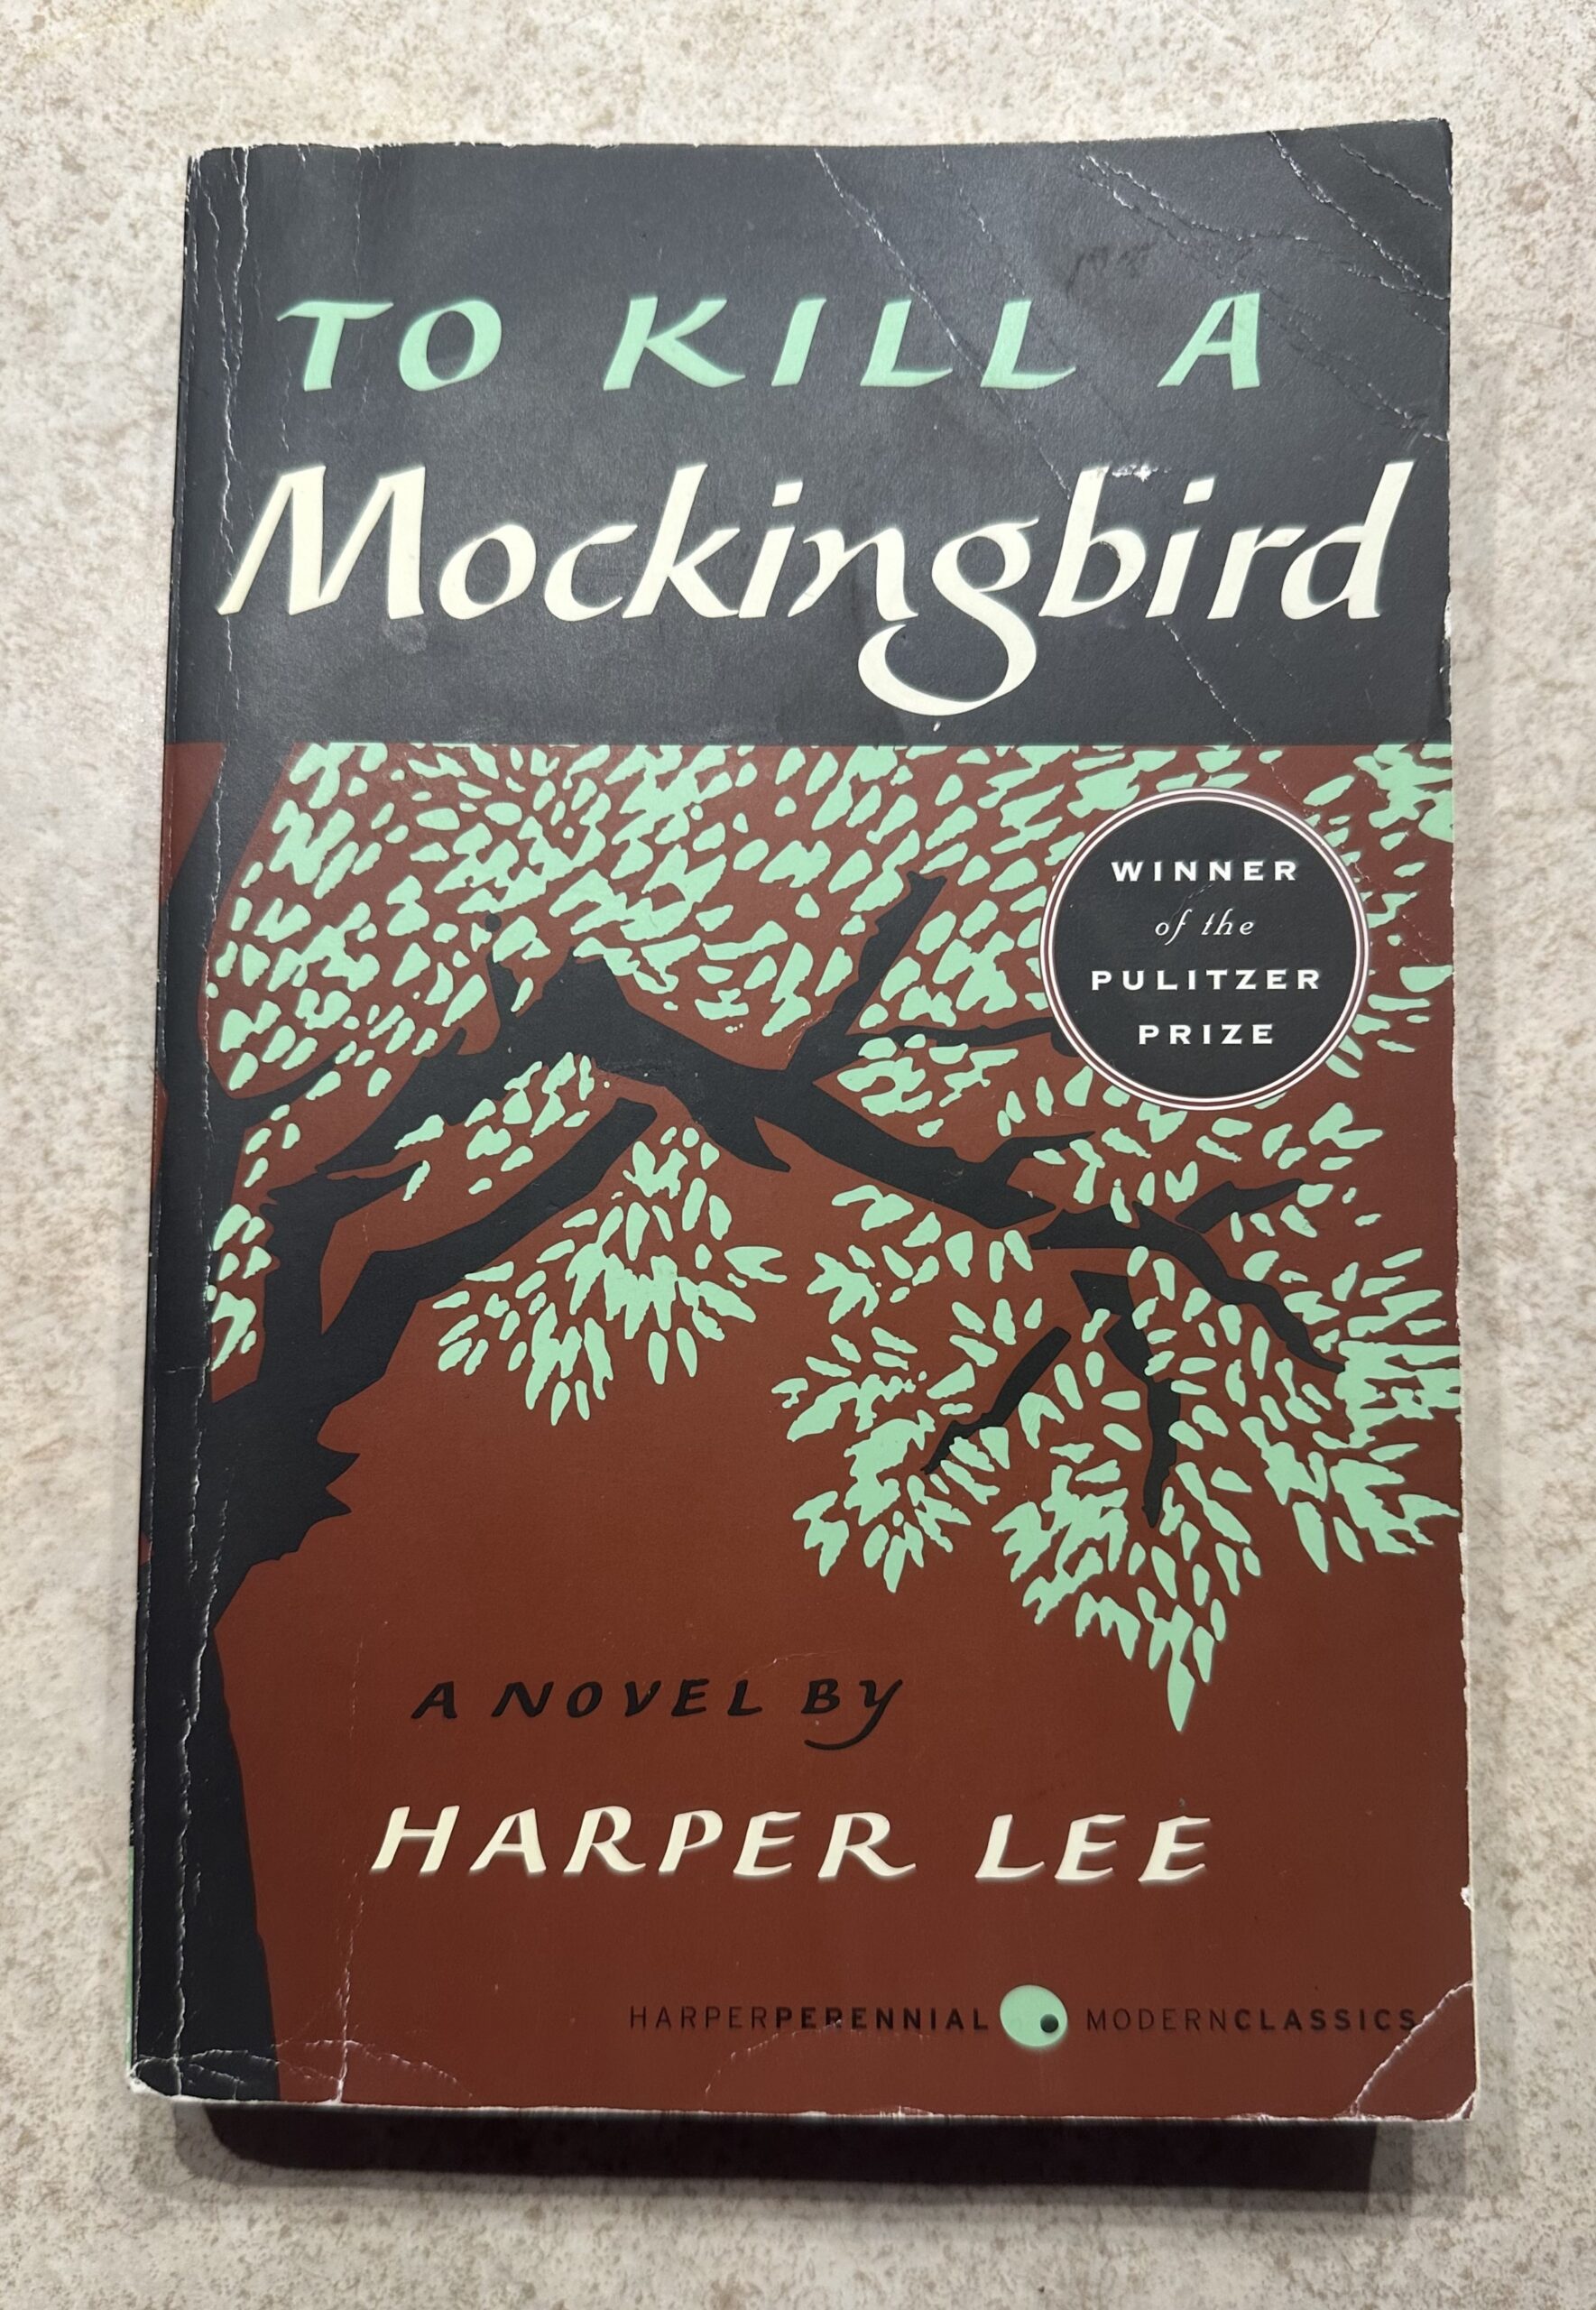 A paperback copy of "To Kill a Mockingbird"